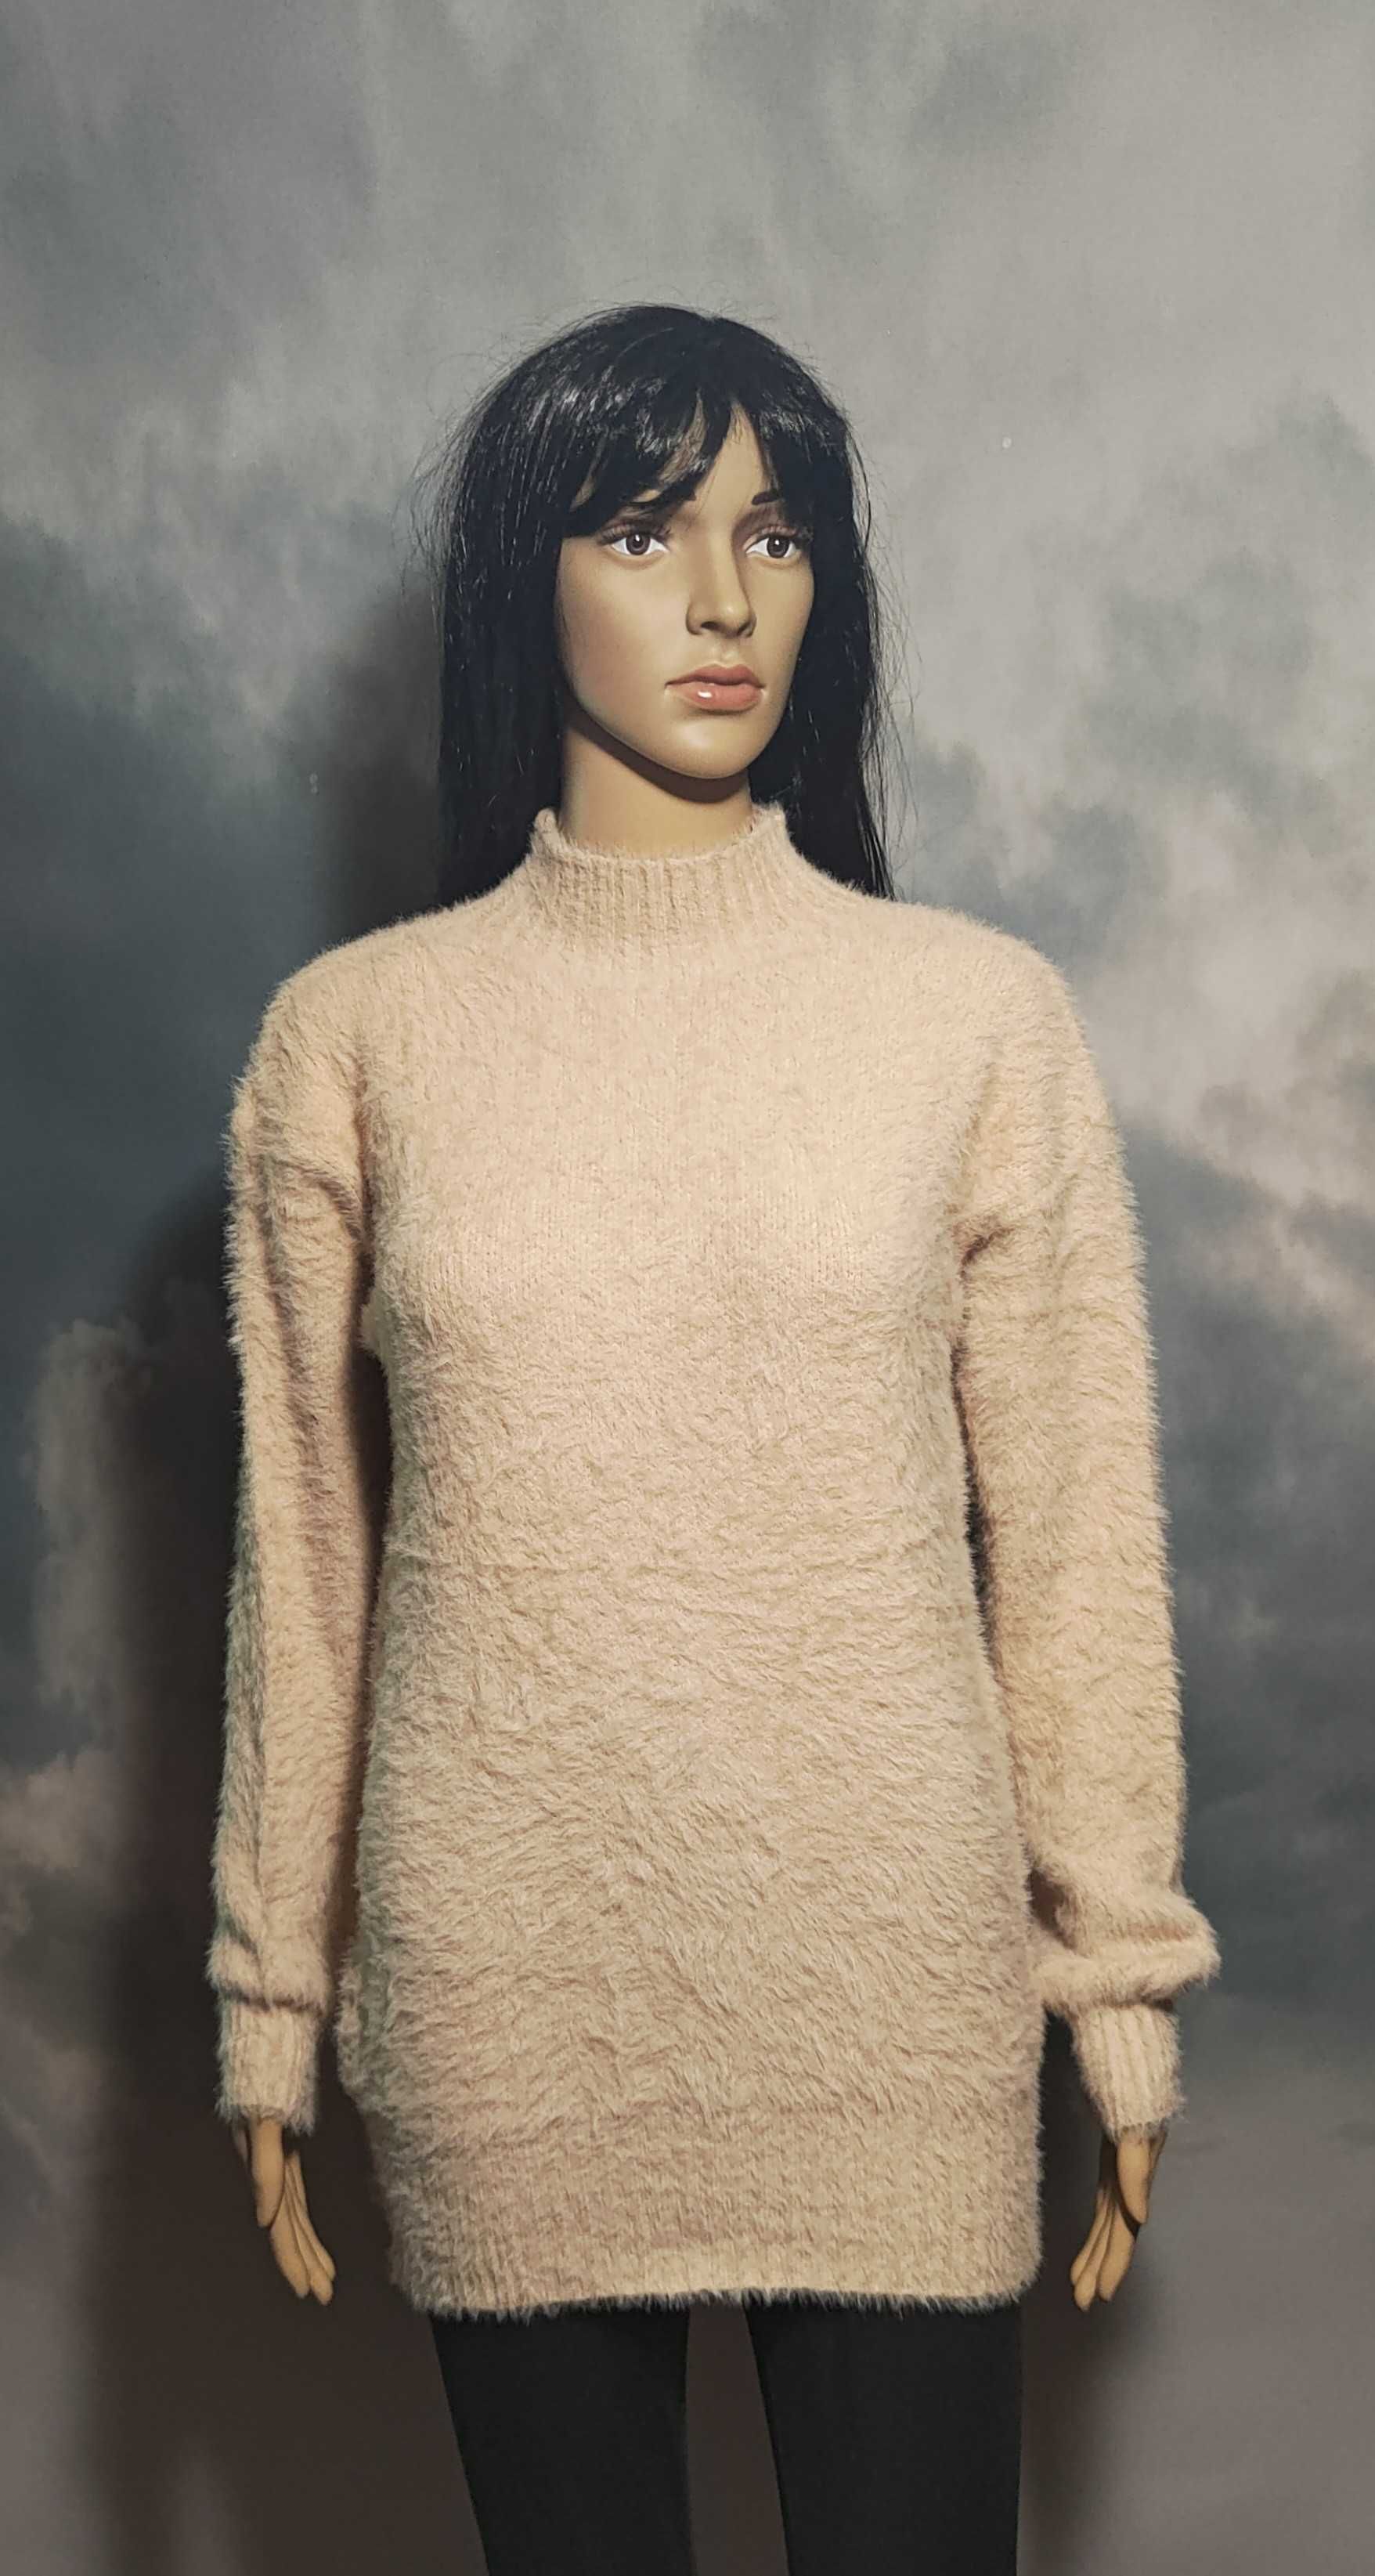 Sweter sweterek ciepłe, lekkie miłe futerko XL/XXL